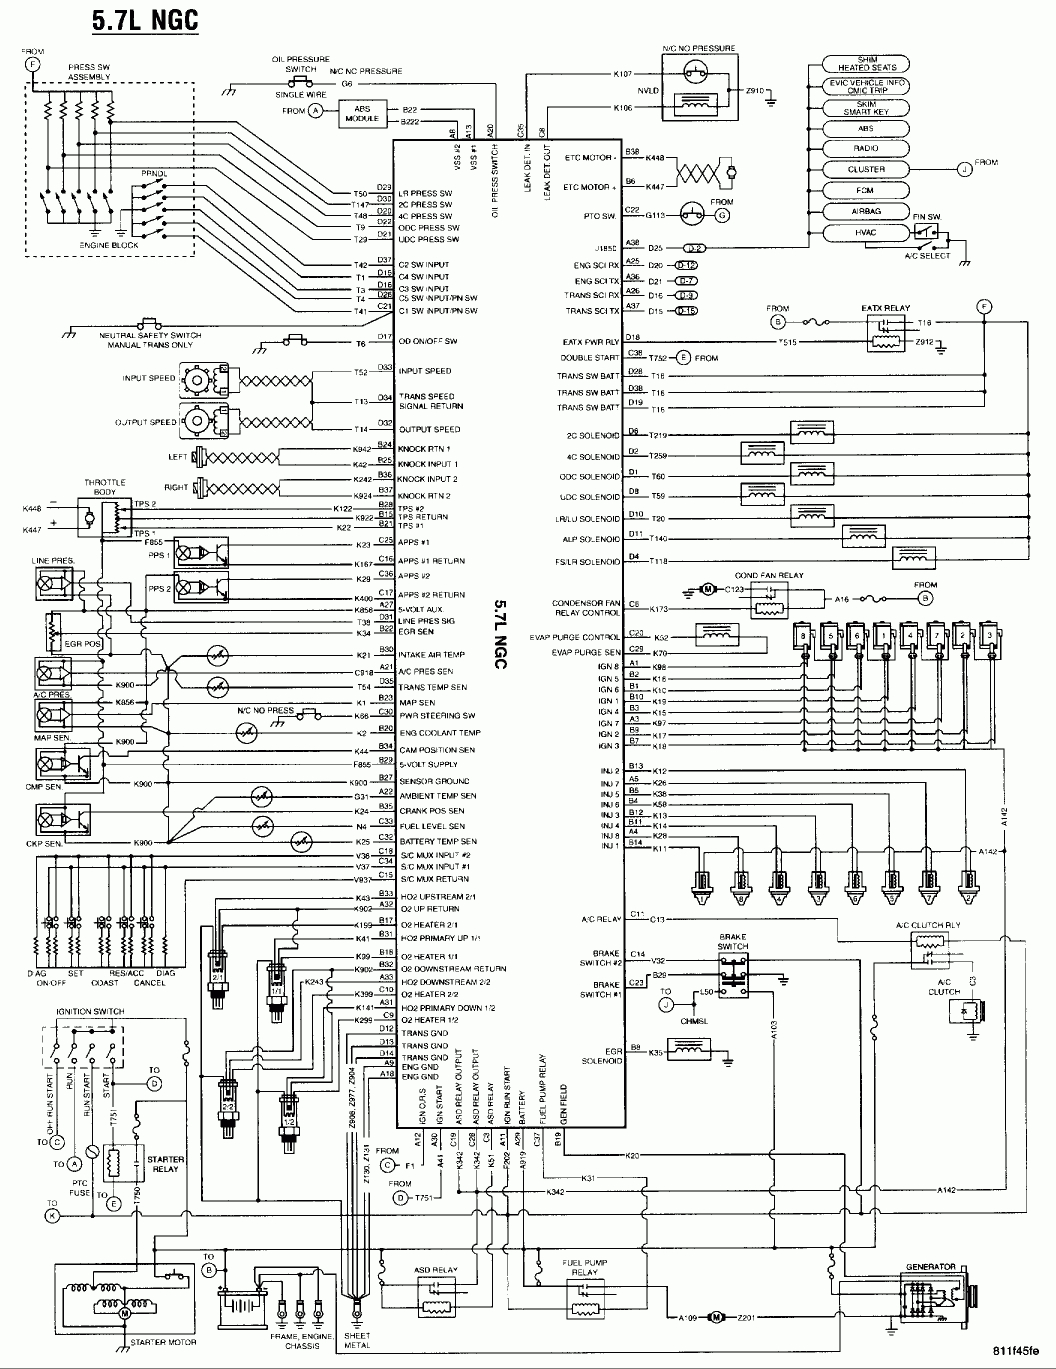 Wiring Diagram For 2004 Dodge Ram 1500 | Manual E-Books - 2004 Dodge Ram 1500 Wiring Diagram